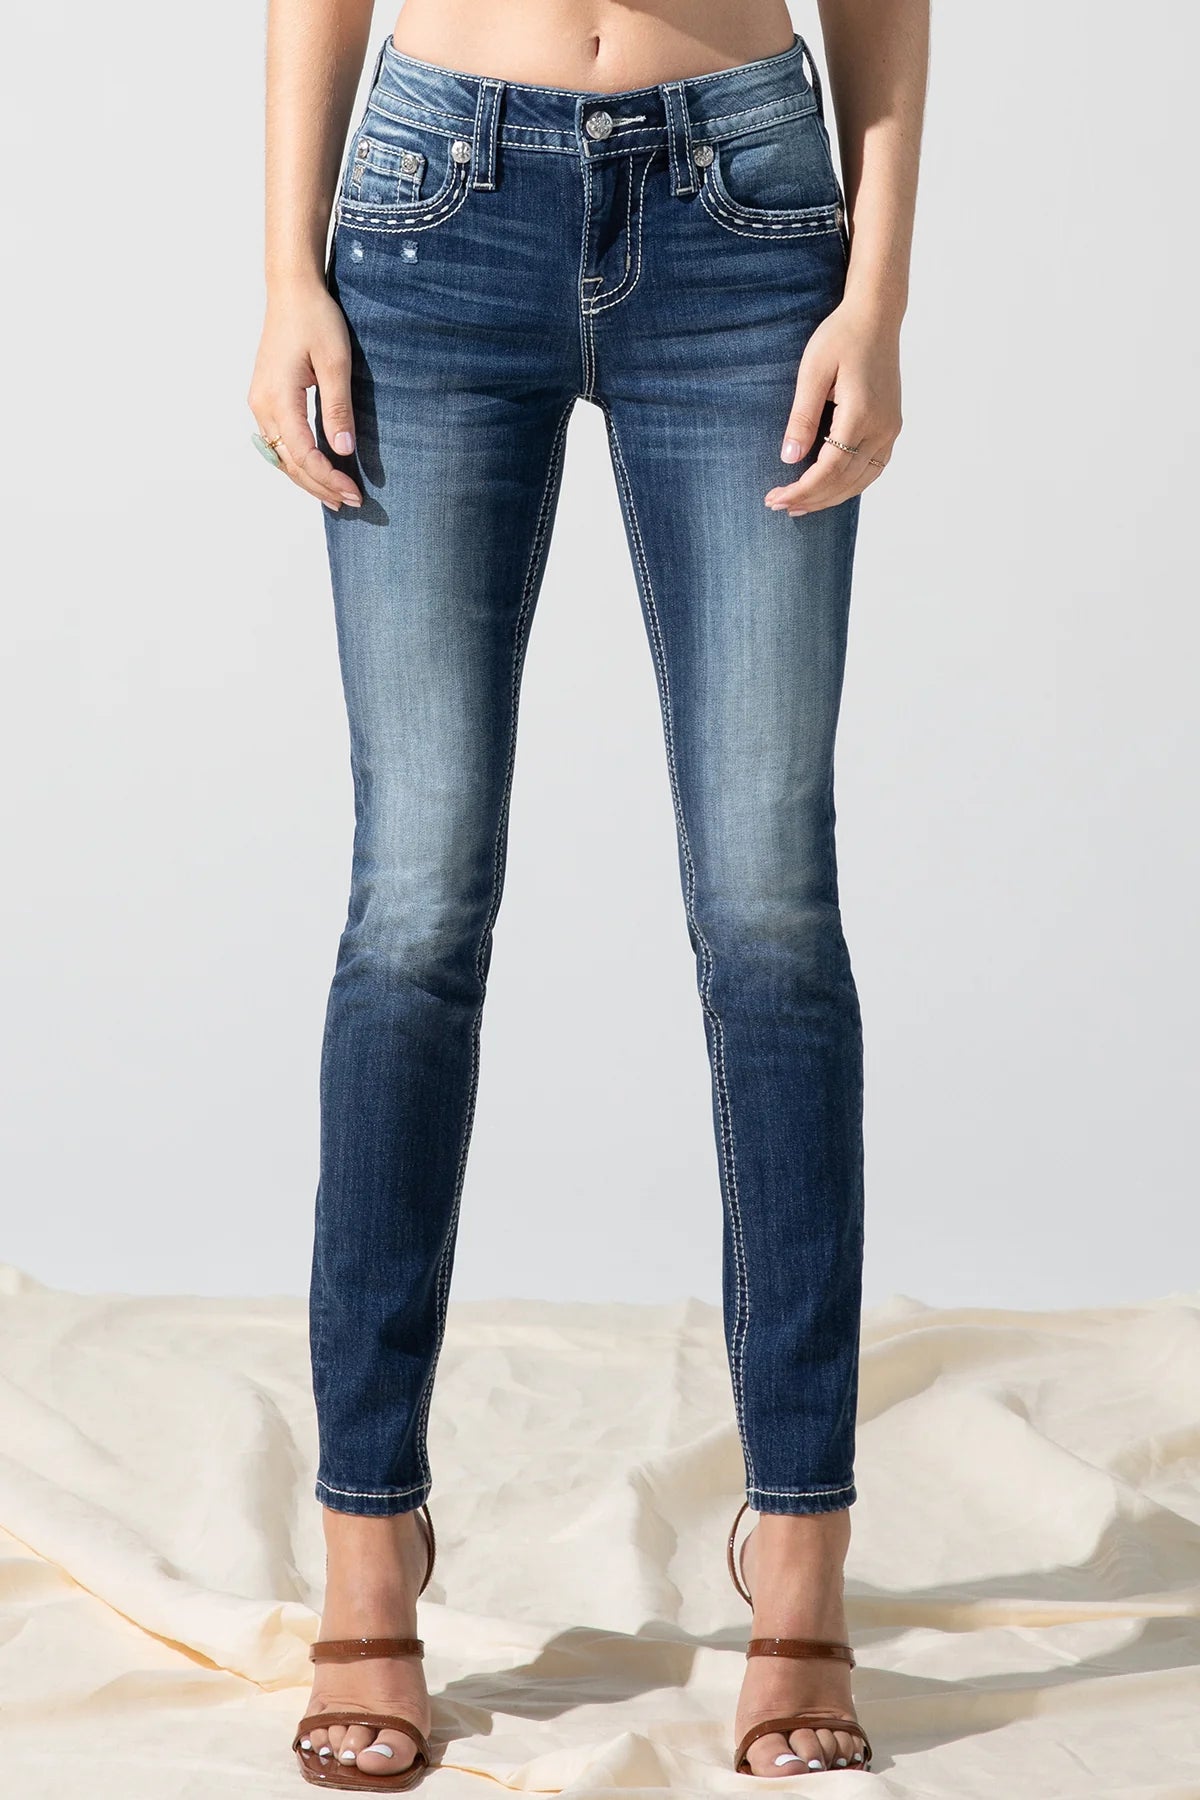 MM's Secret Skinny Jeans